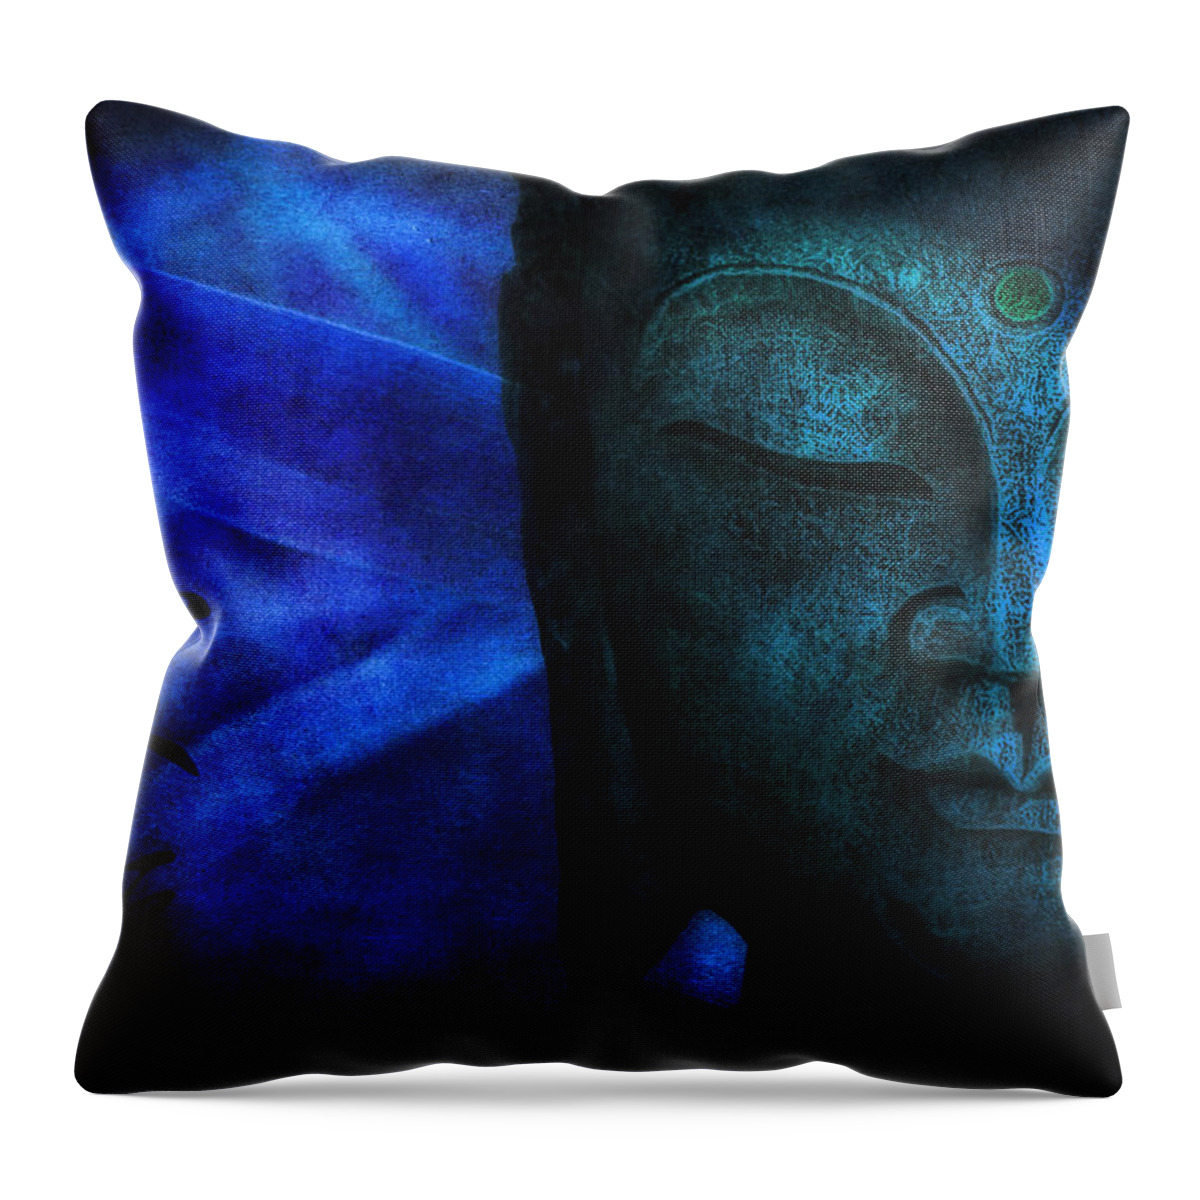 Buddha Throw Pillow featuring the photograph Blue Balance by Joachim G Pinkawa